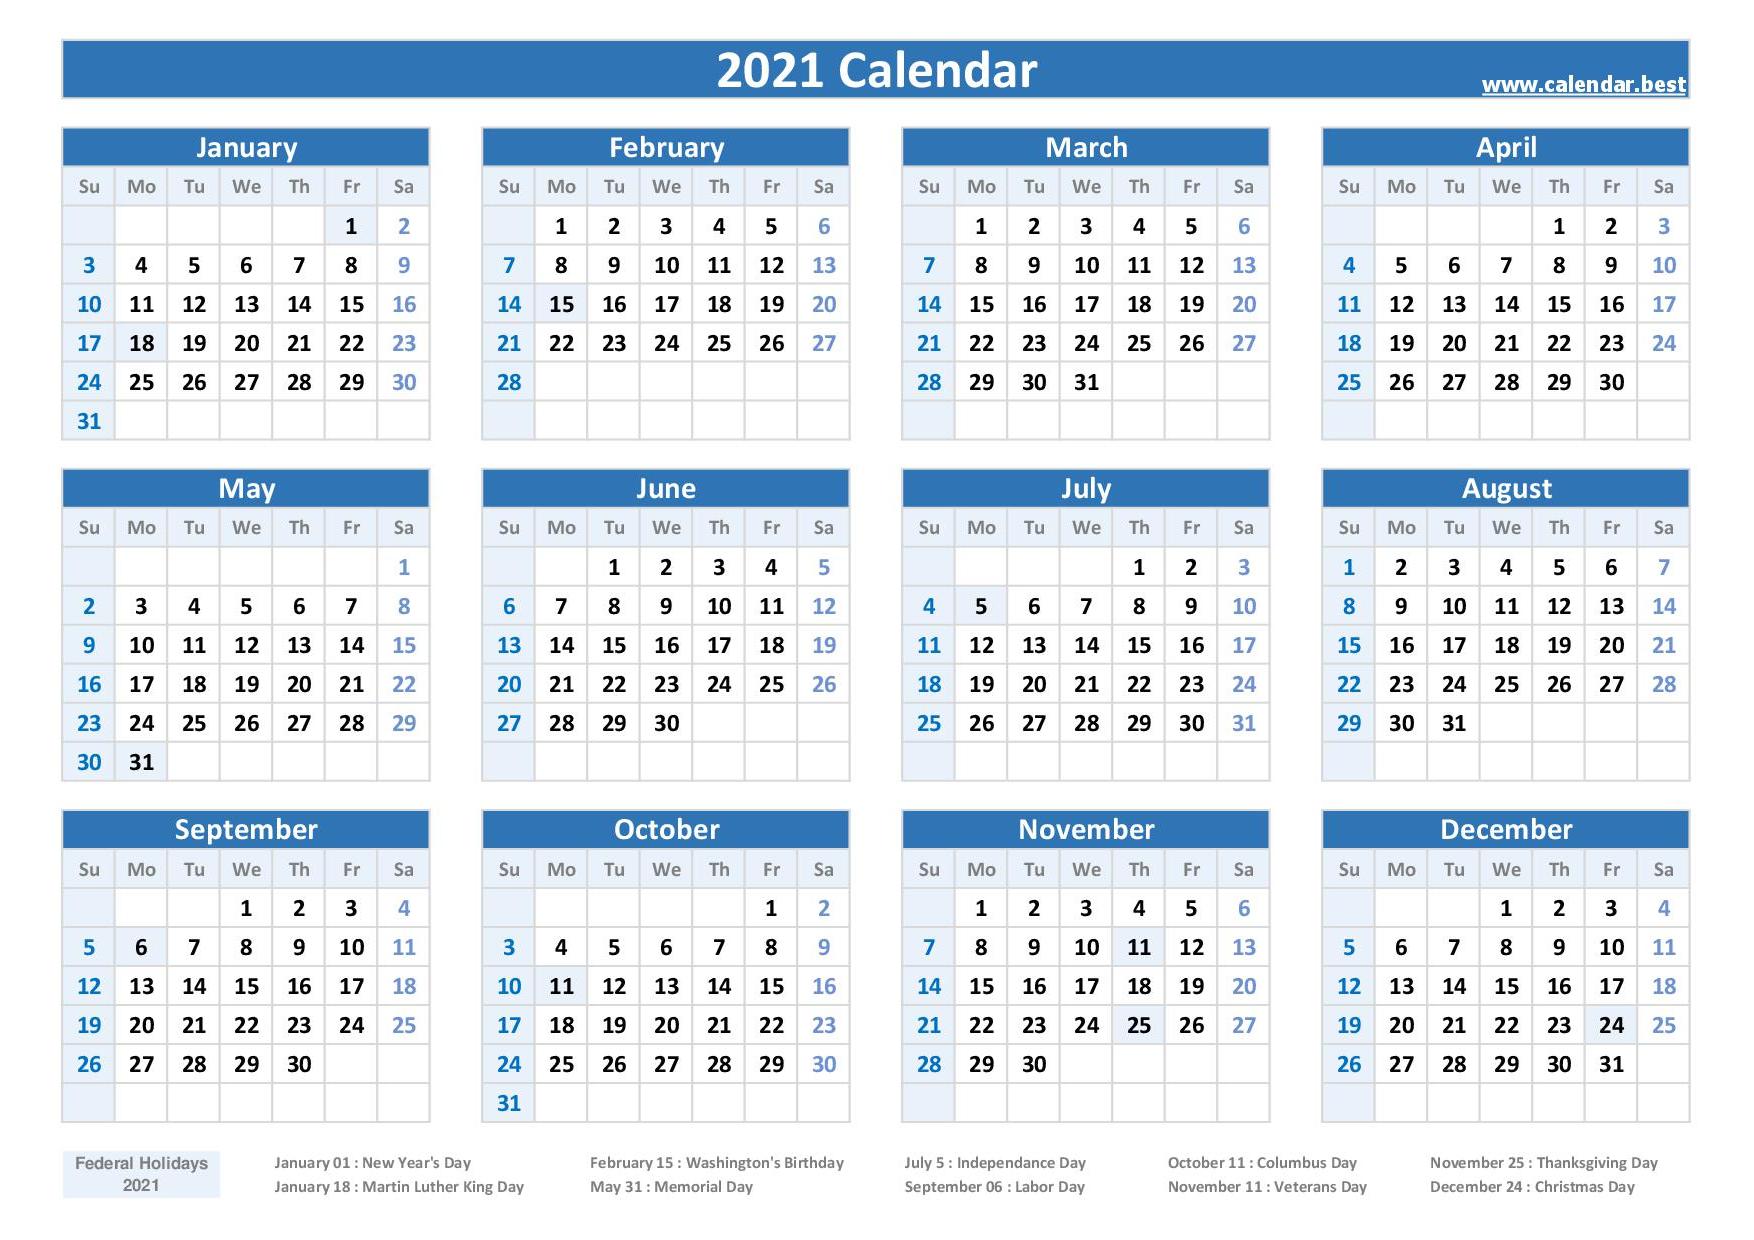 2021, 2022, 2023 Federal Holidays list and calendars